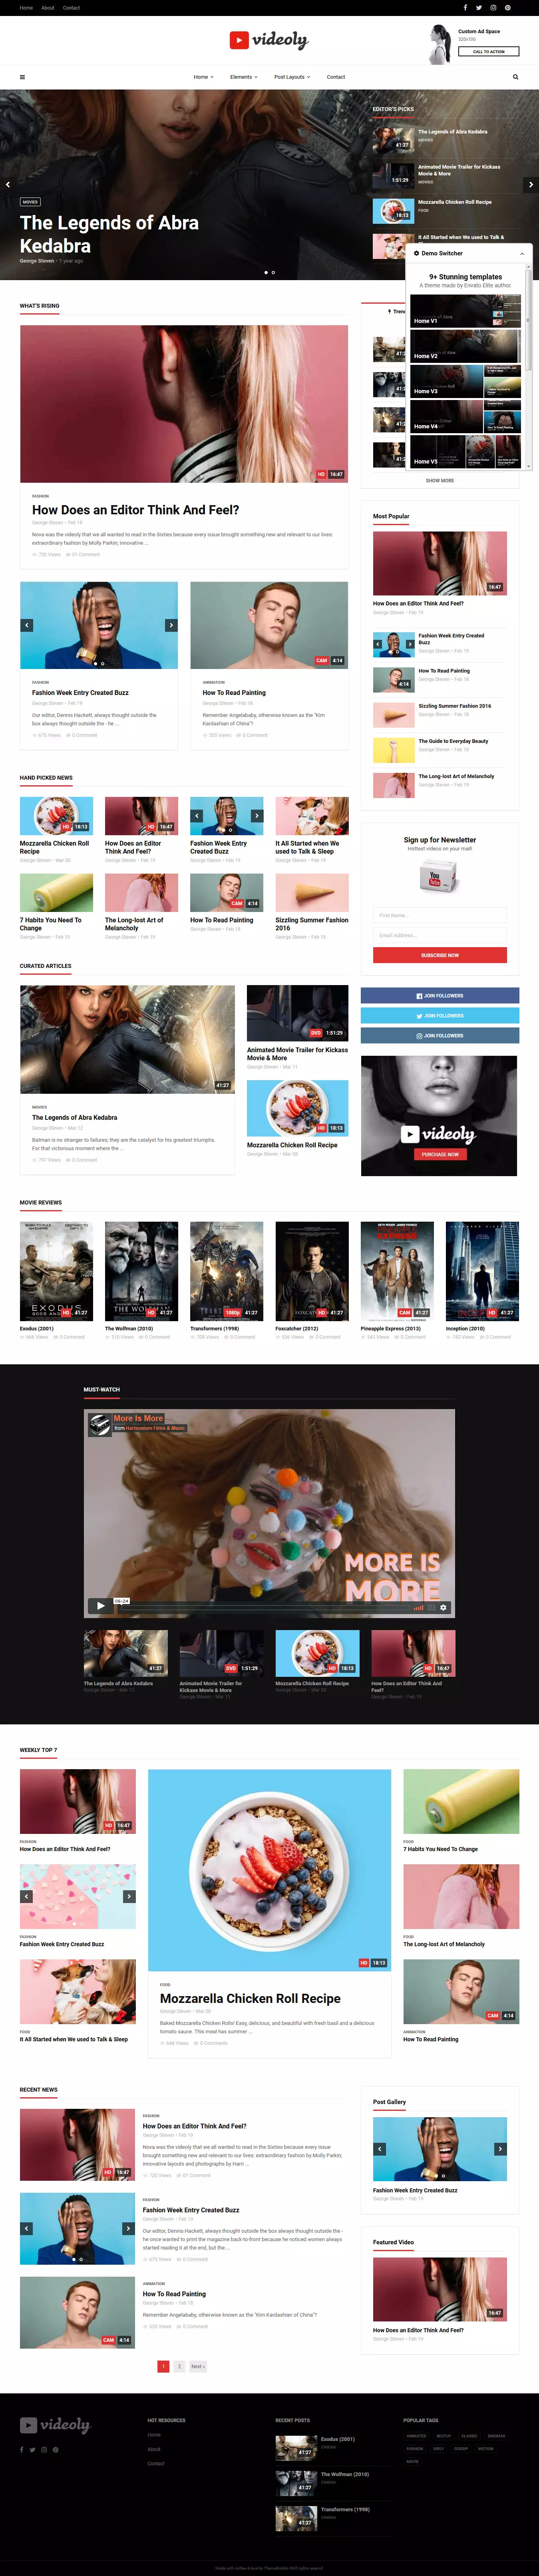 Videloy - Best Premium Video and Music WordPress Theme